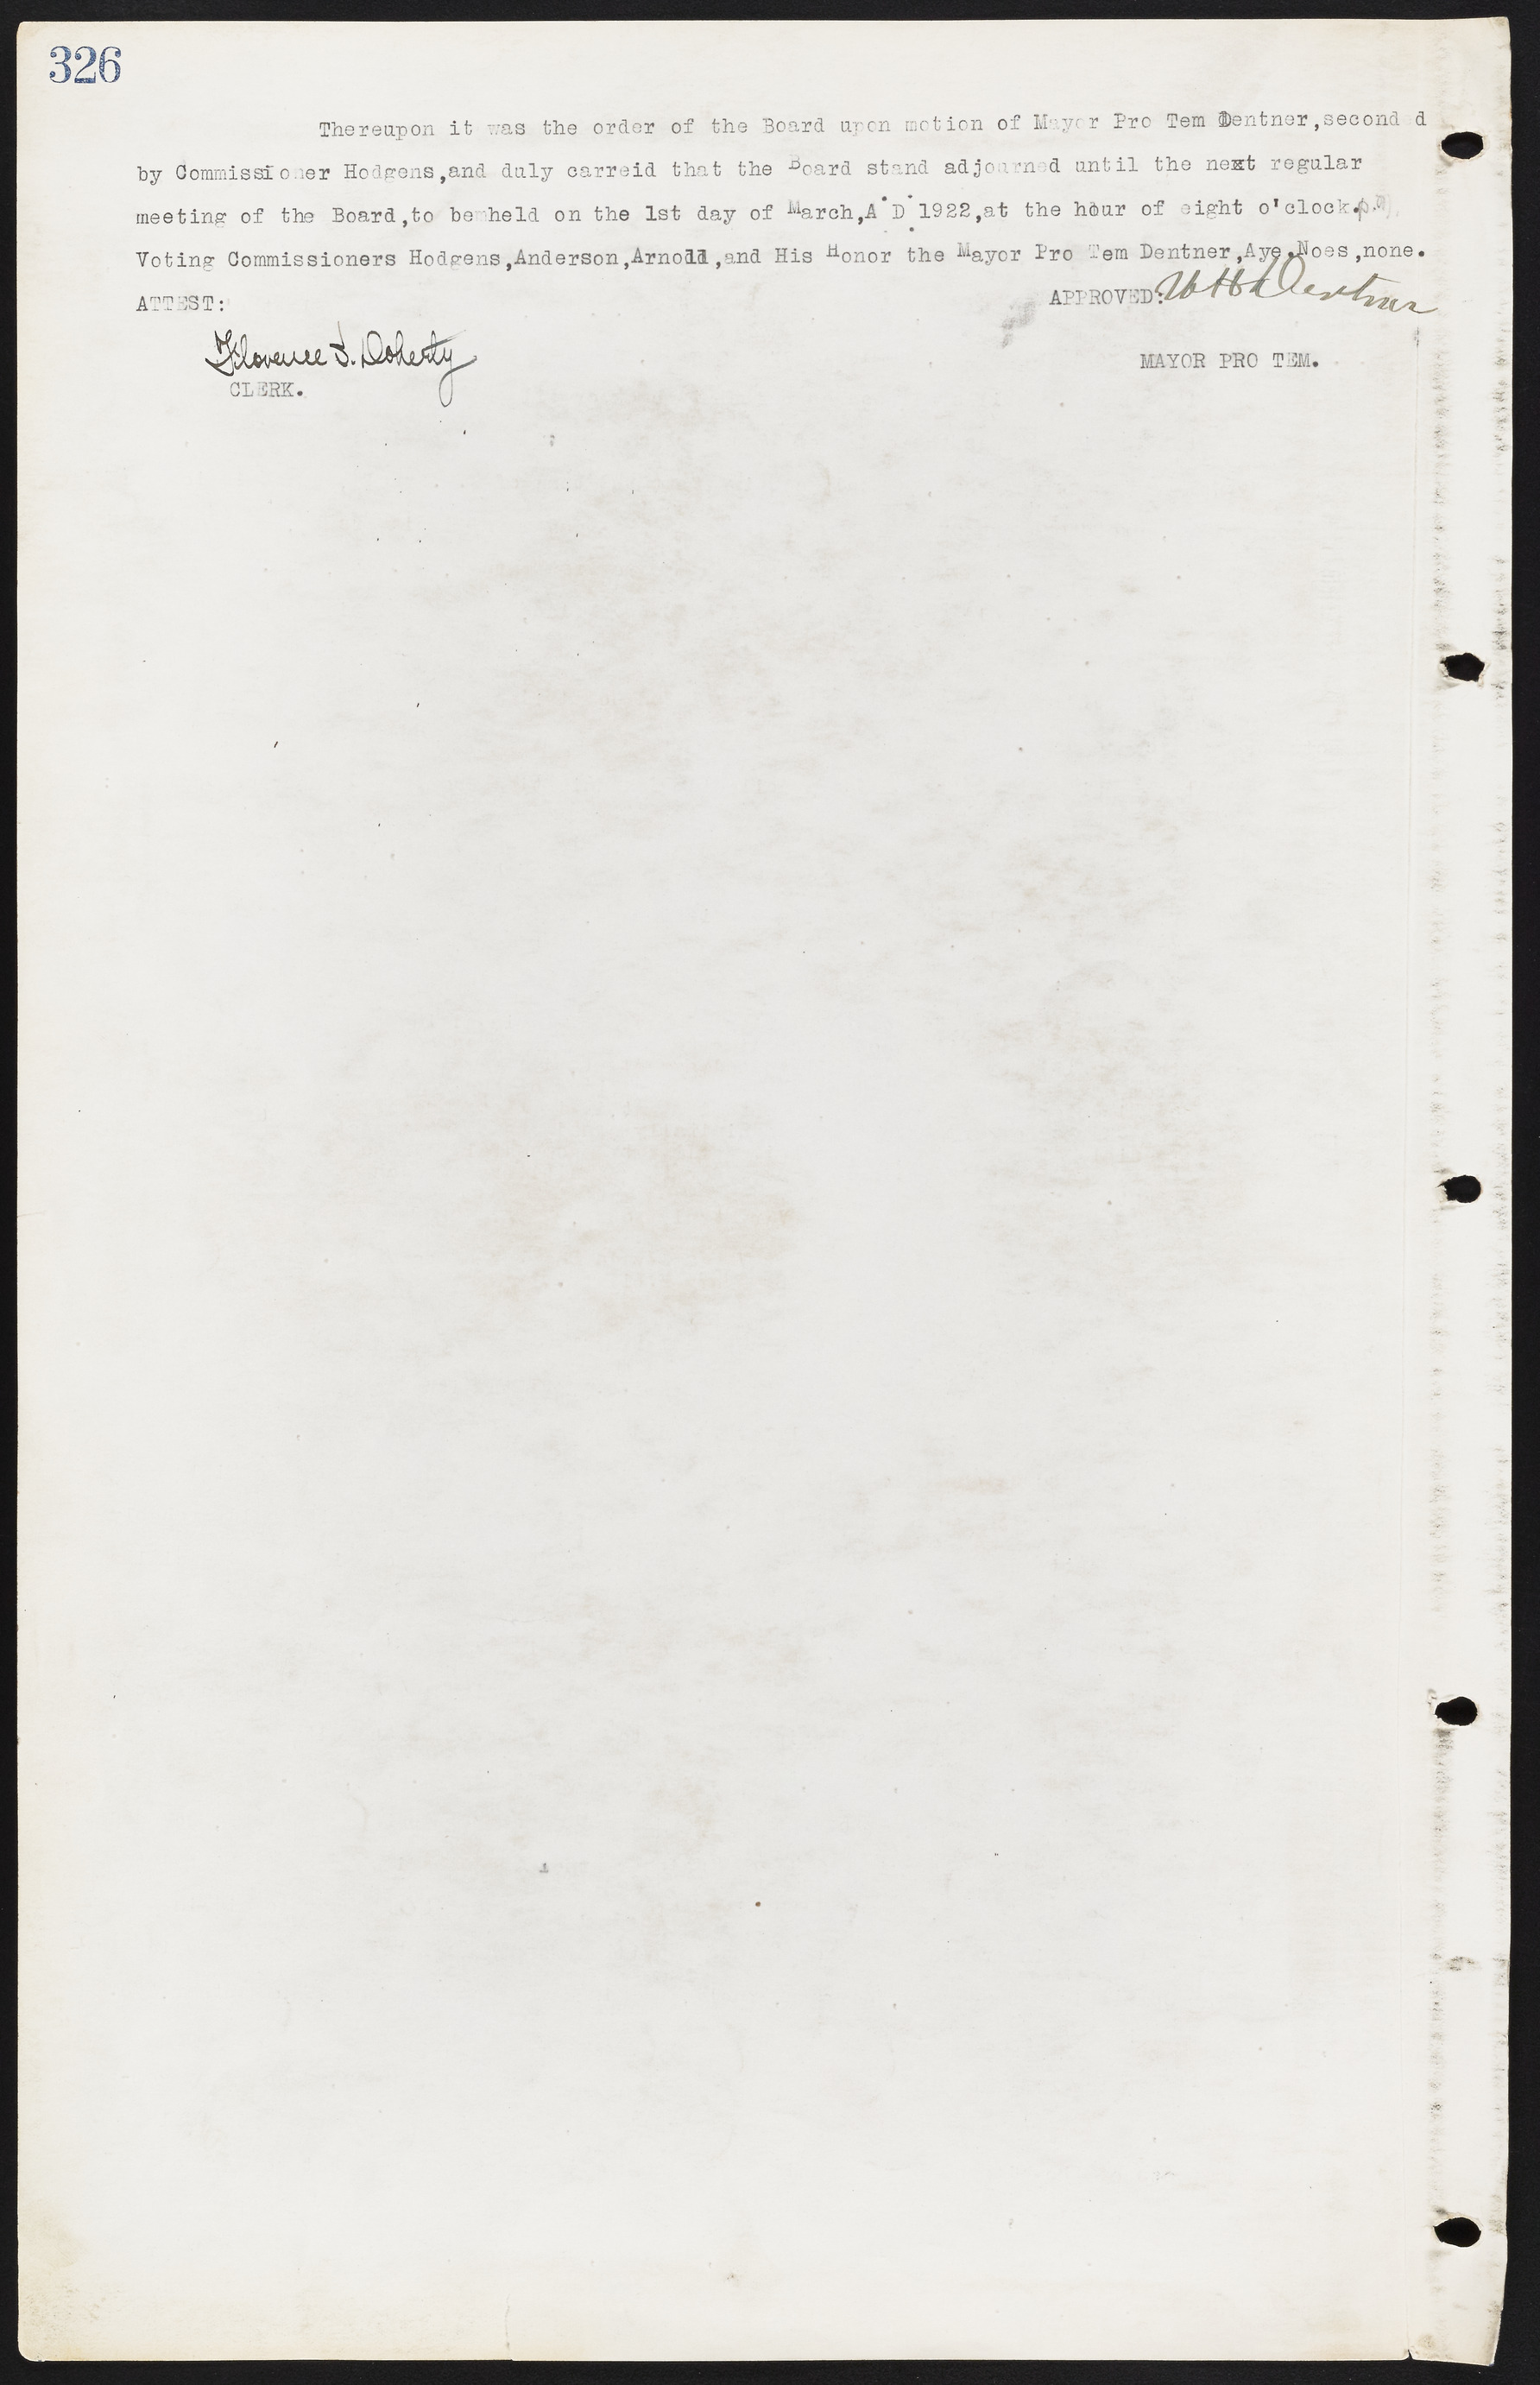 Las Vegas City Commission Minutes, June 22, 1911 to February 7, 1922, lvc000001-342